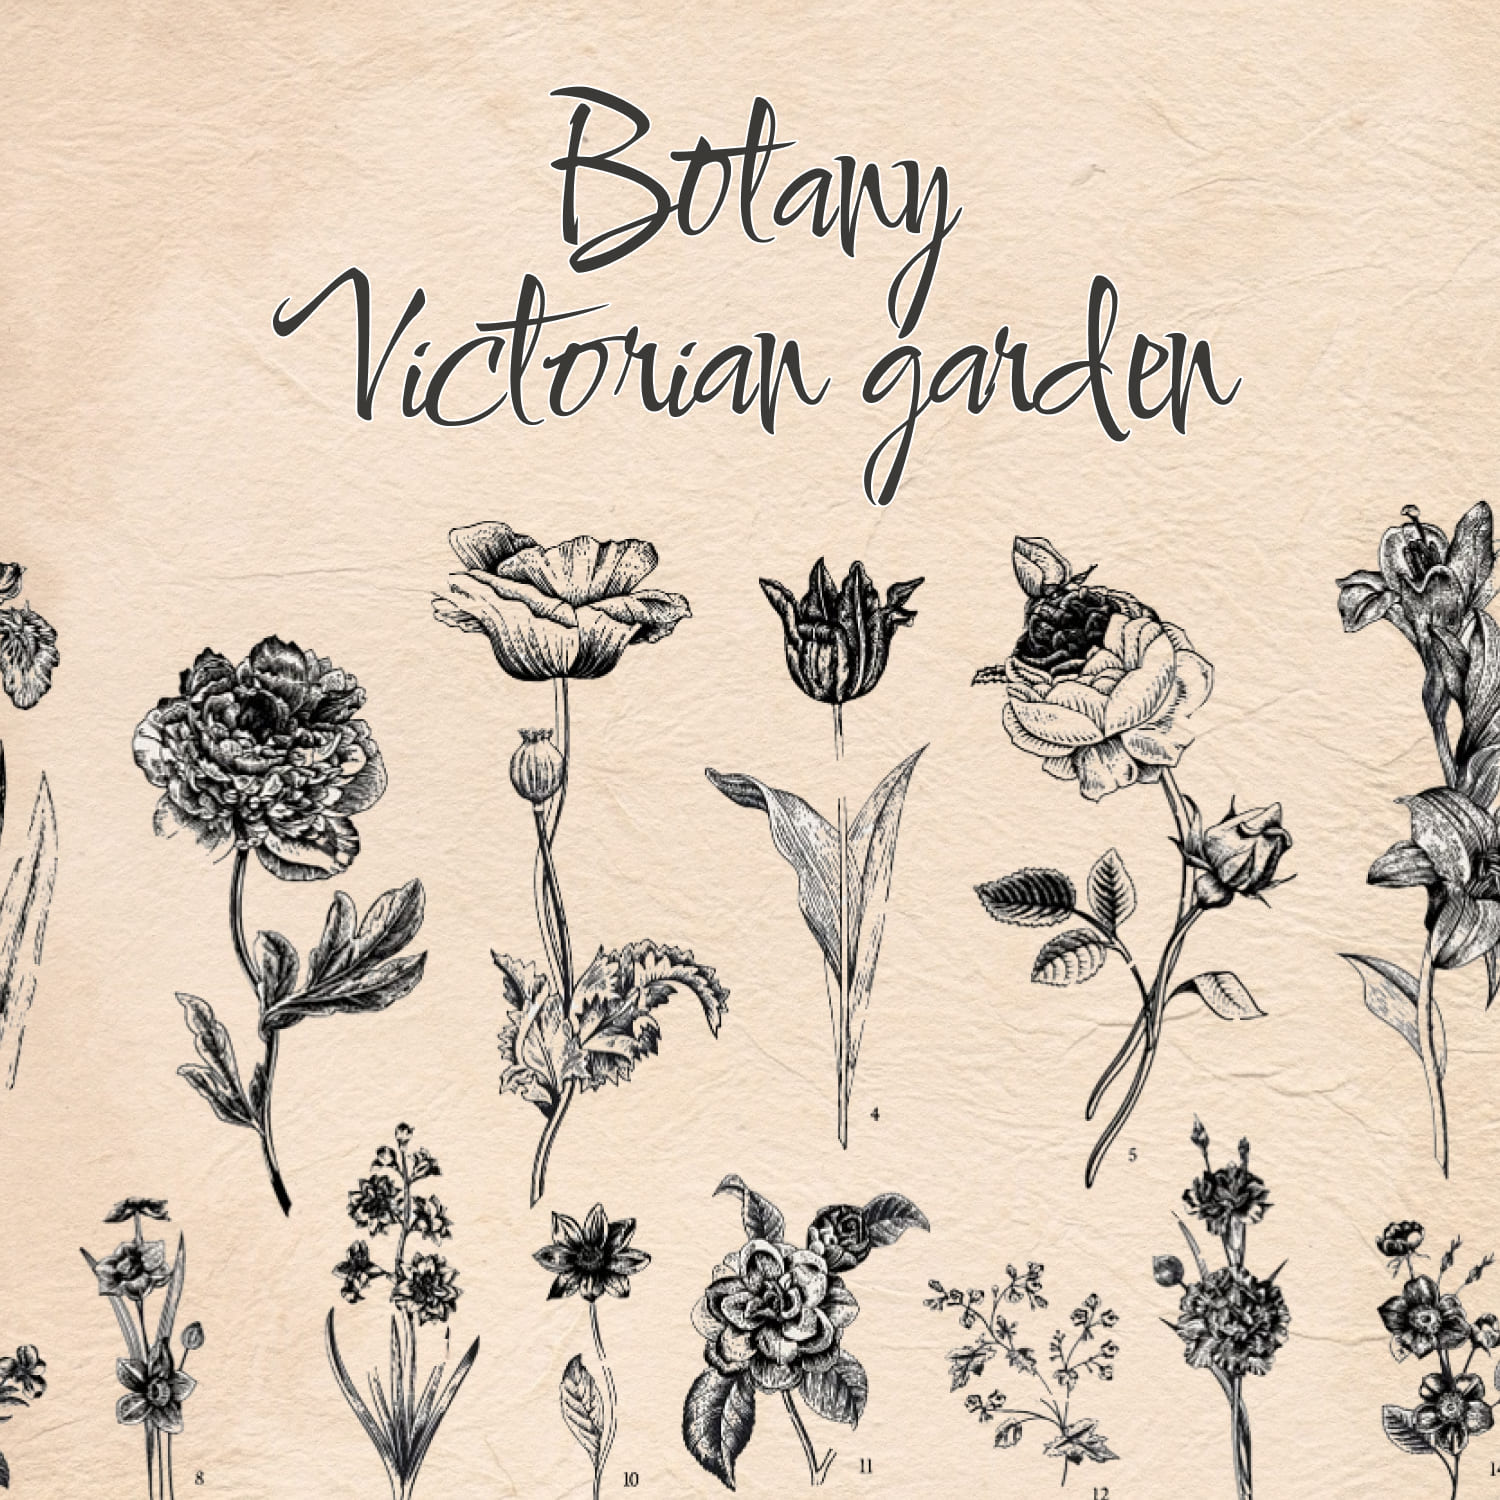 Botanical illustration set. Victorian garden. 28 flowers.